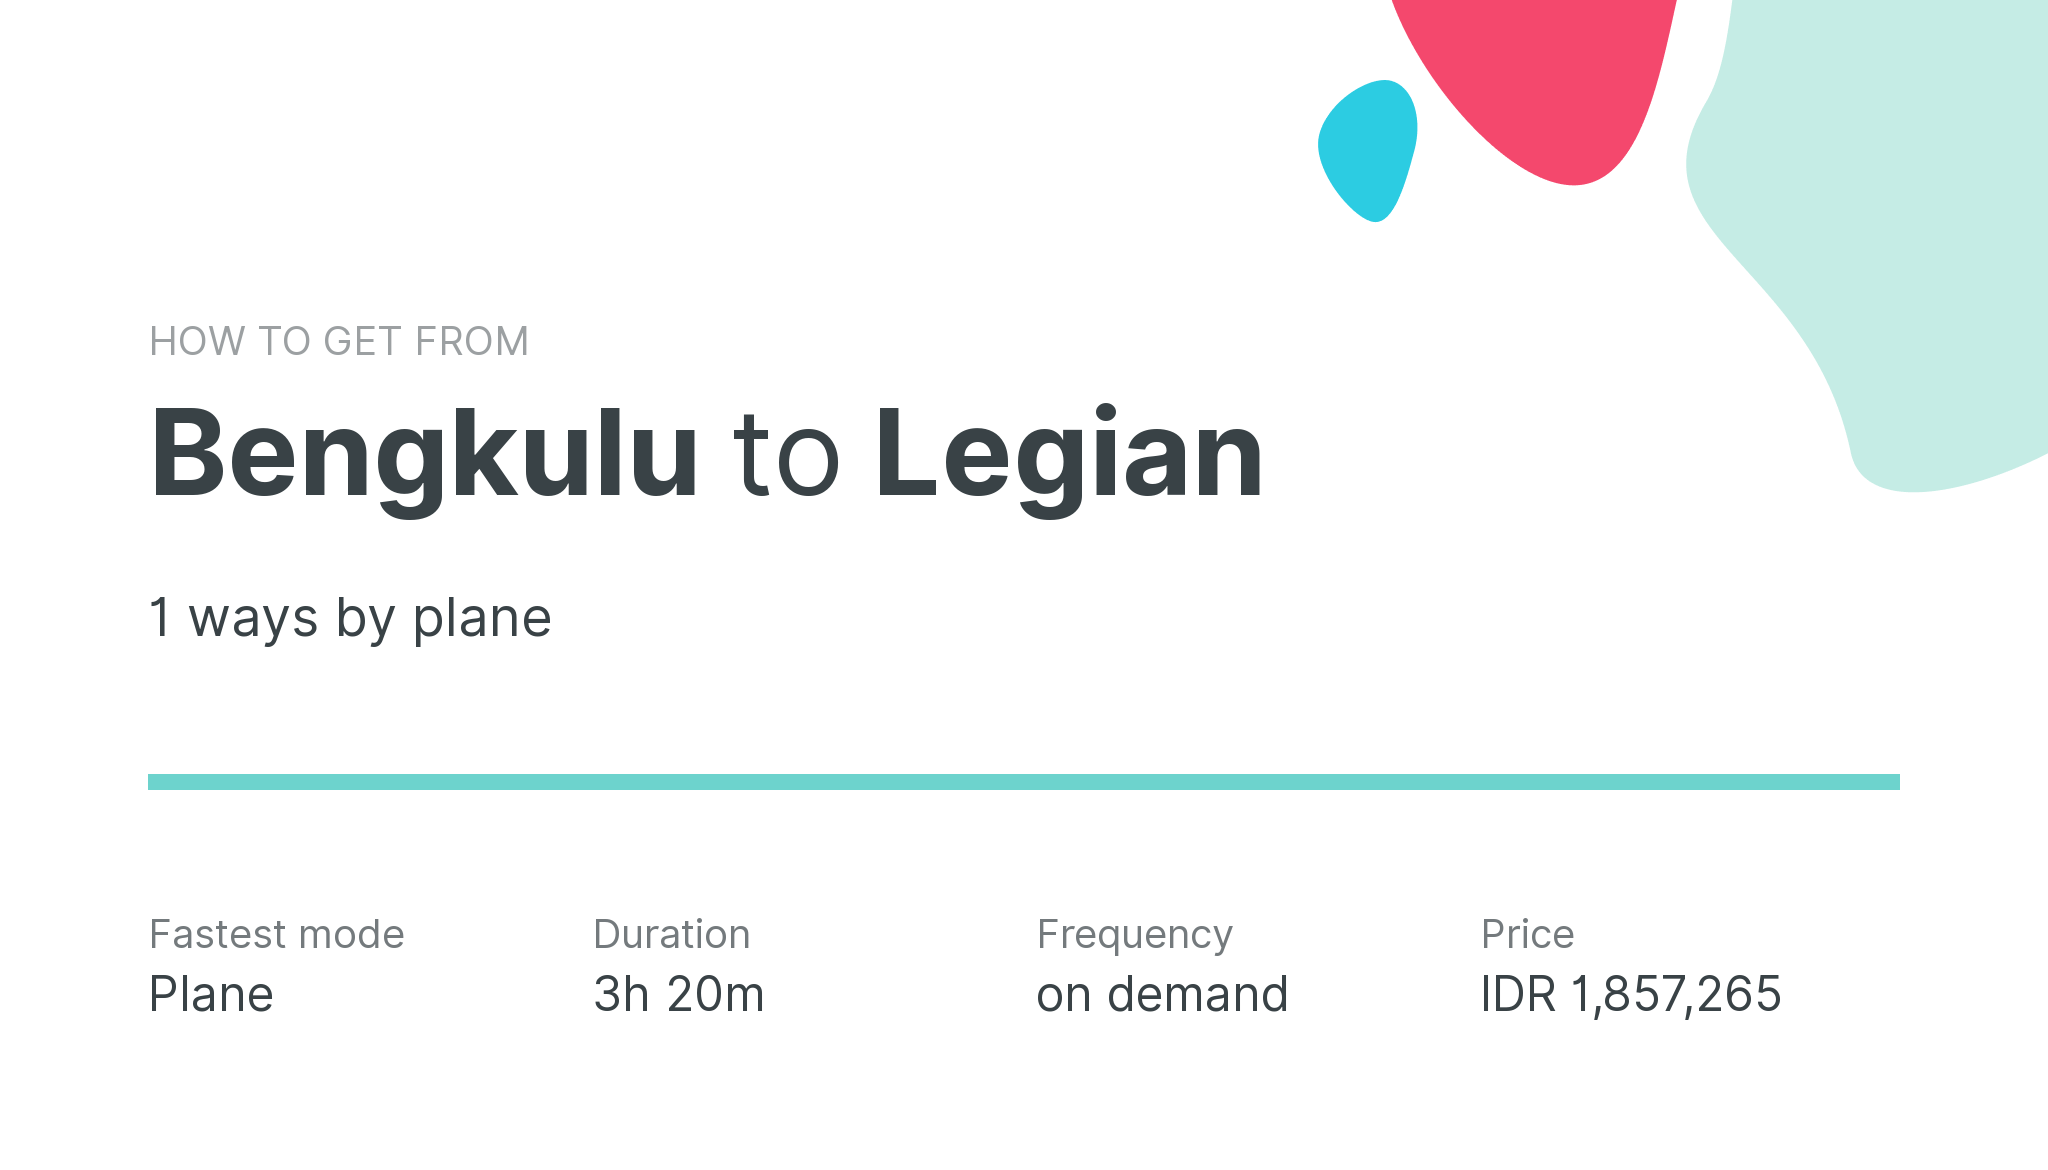 How do I get from Bengkulu to Legian